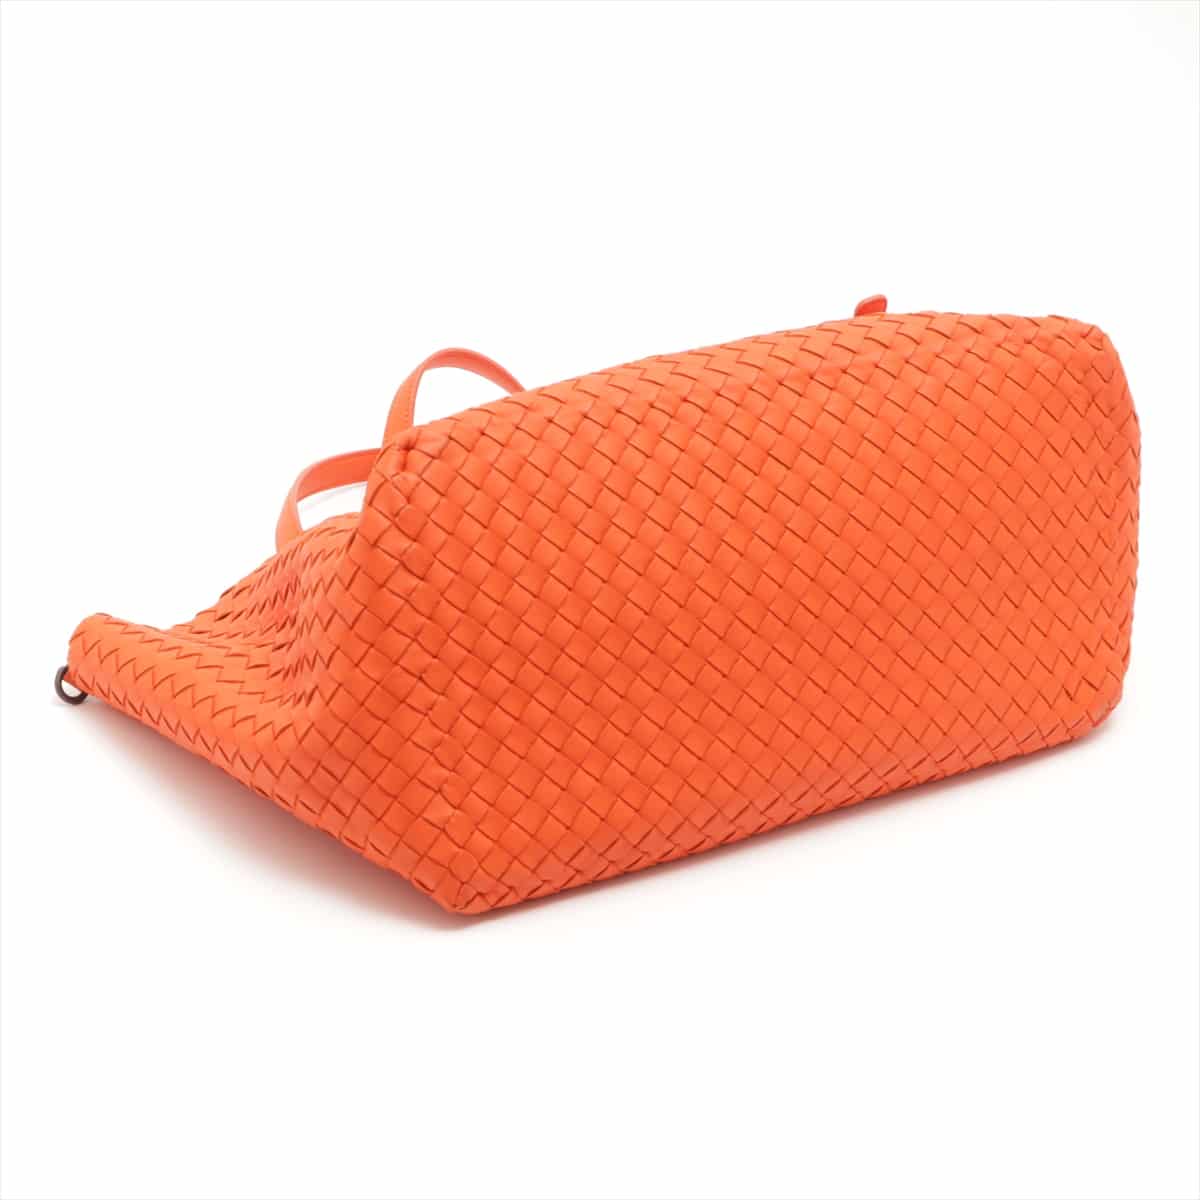 Bottega Veneta Intrecciato Cesta Leather Tote bag Orange With mirror